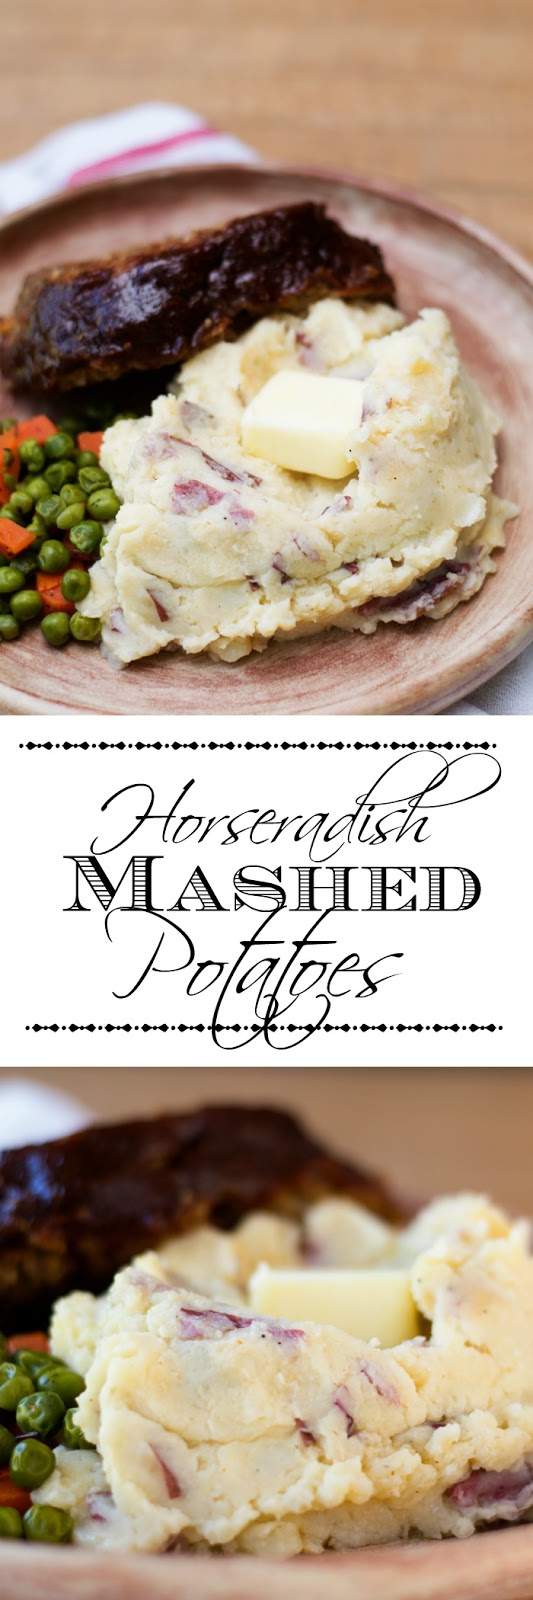 Horseradish Mashed Potatoes Recipe - The Kitchen Wife